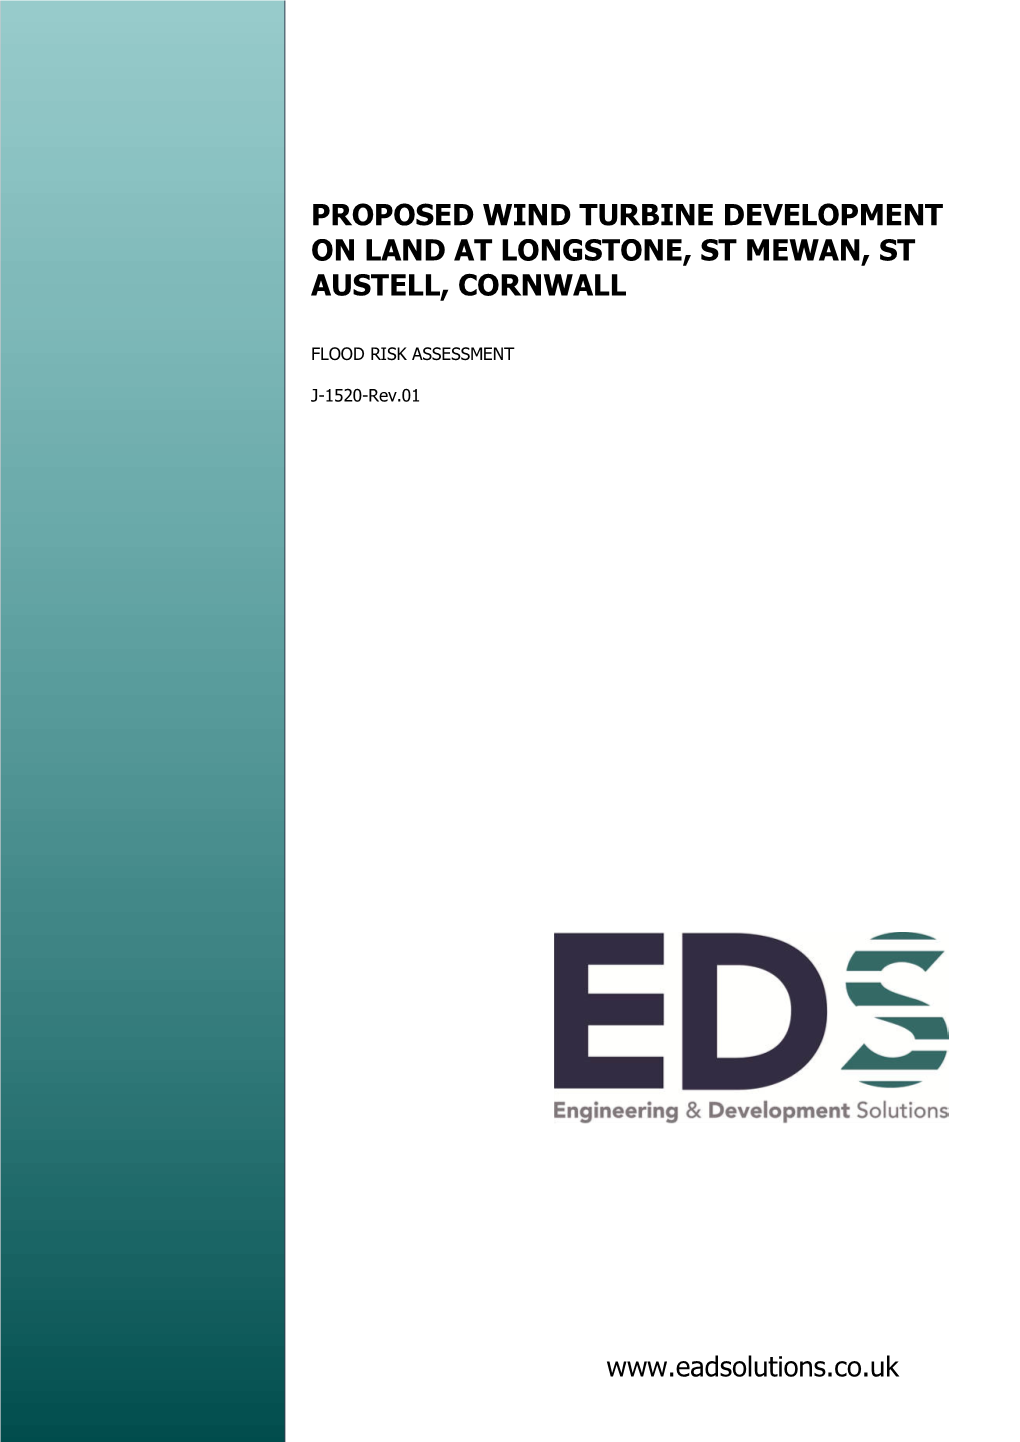 Proposed Wind Turbine Development on Land at Longstone, St Mewan, St Austell, Cornwall